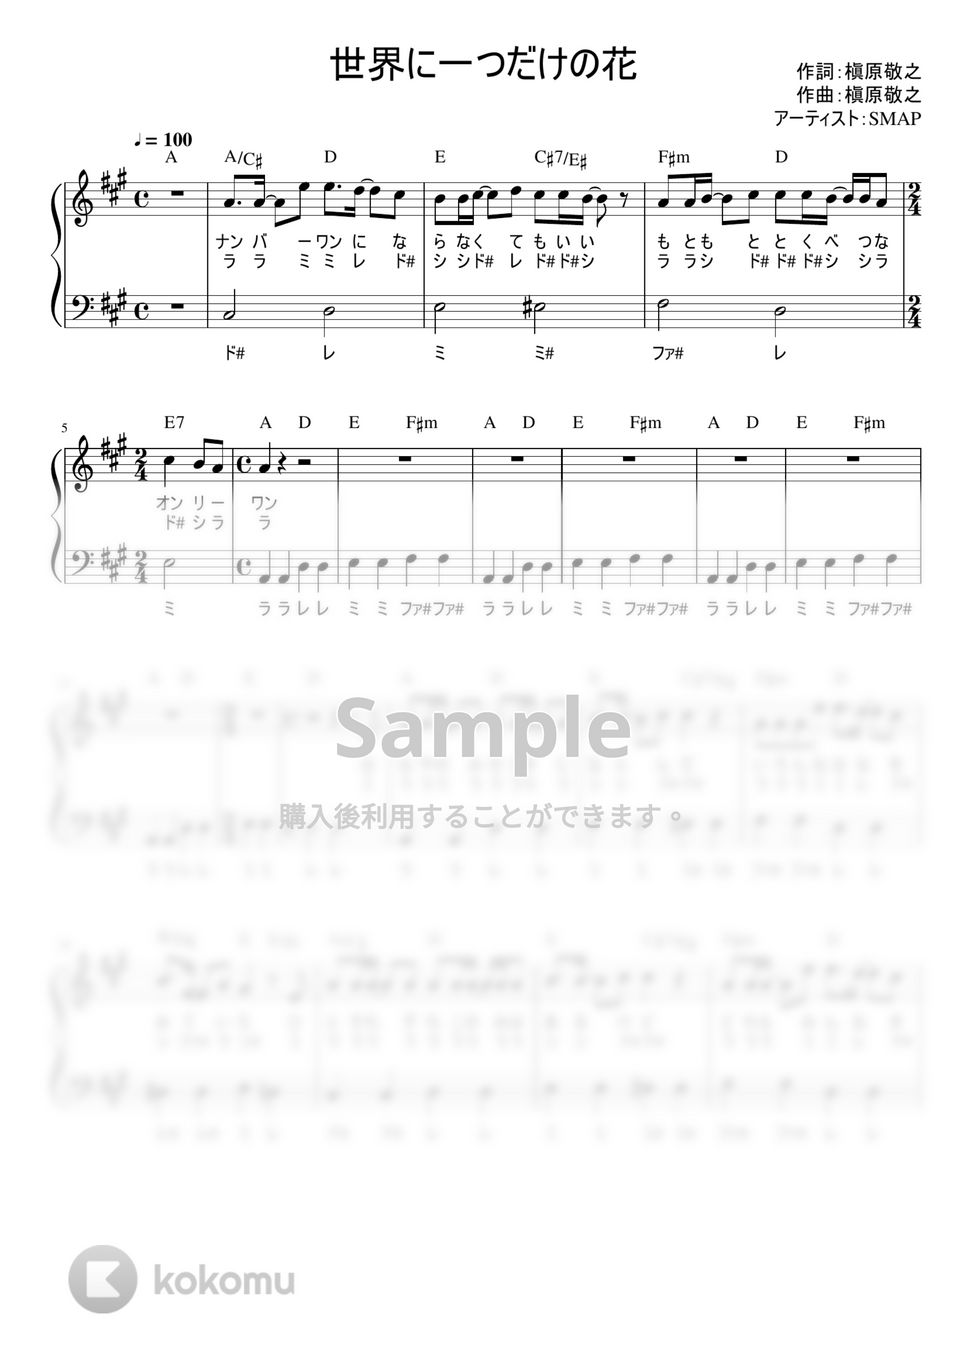 SMAP - 世界に一つだけの花 (かんたん / 歌詞付き / ドレミ付き / 初心者) by piano.tokyo